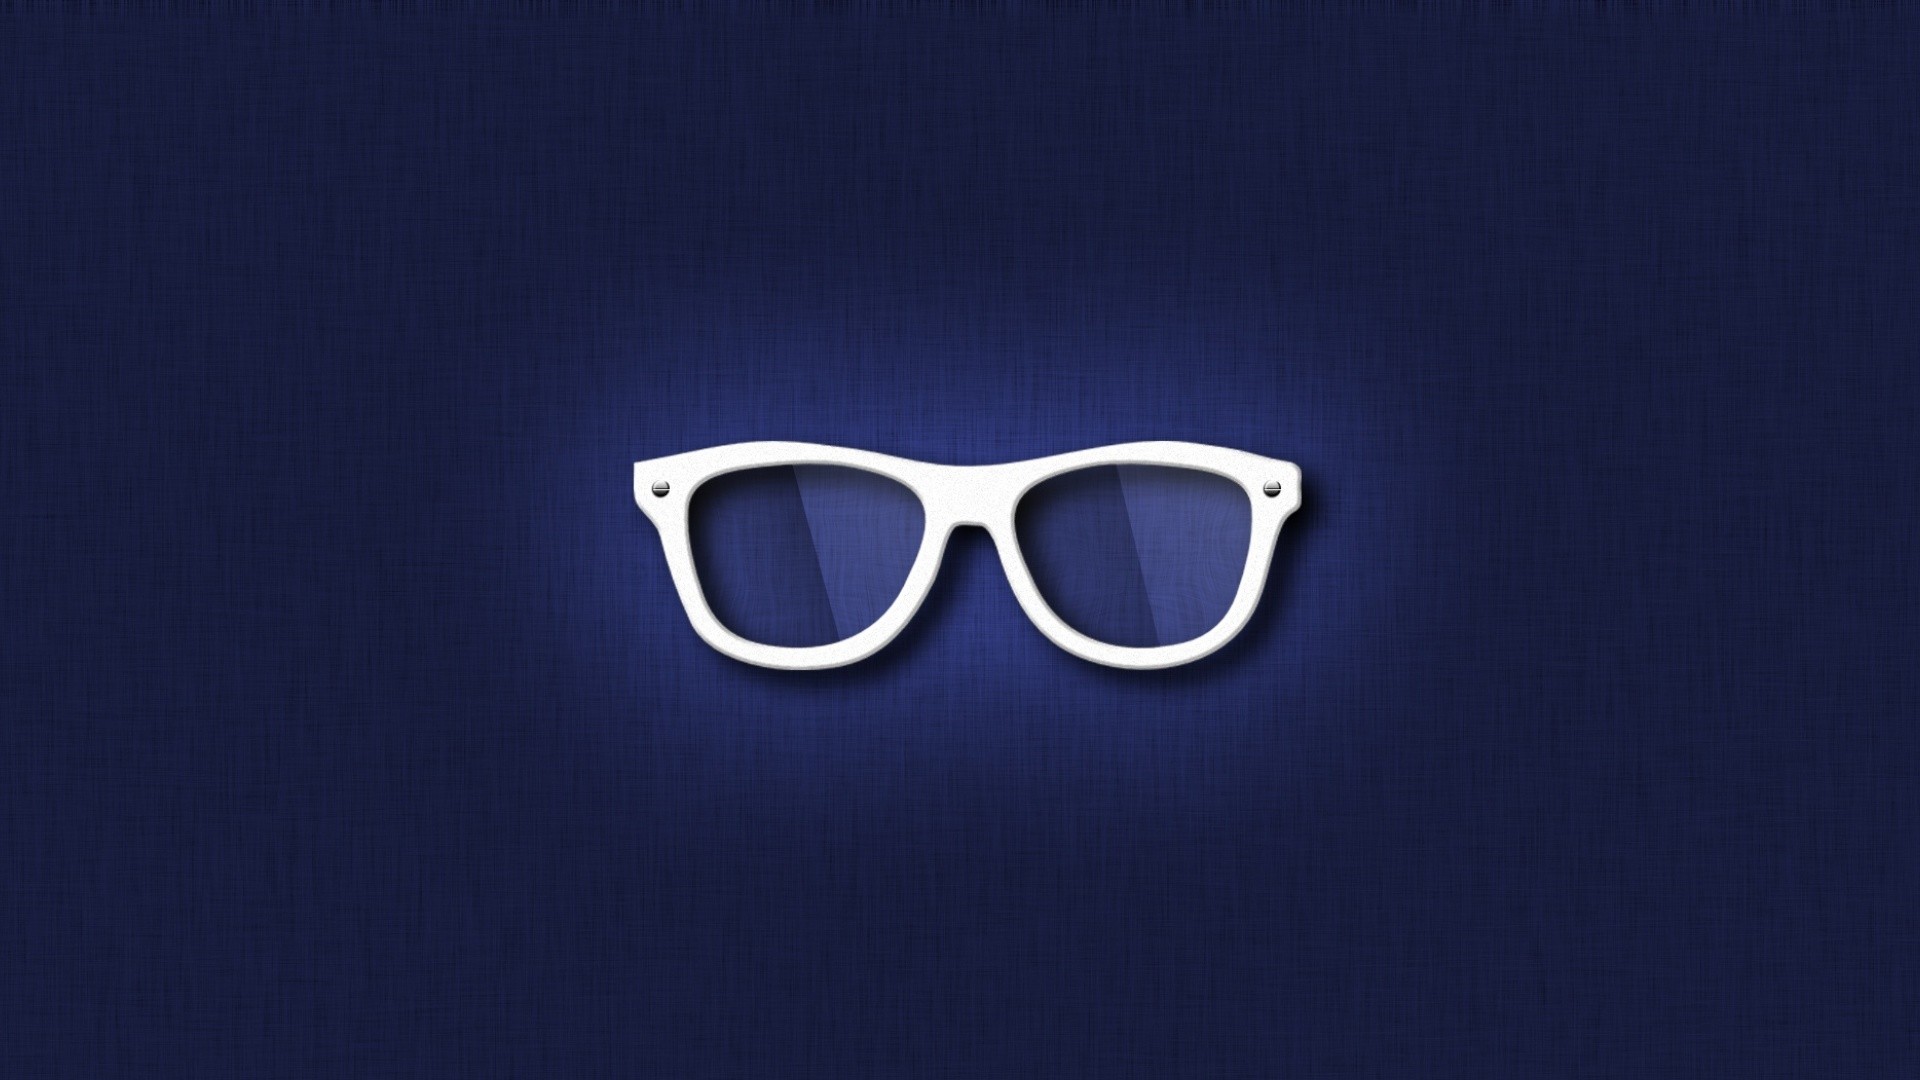 Hipster Glasses Desktop Pc And Mac Wallpaper